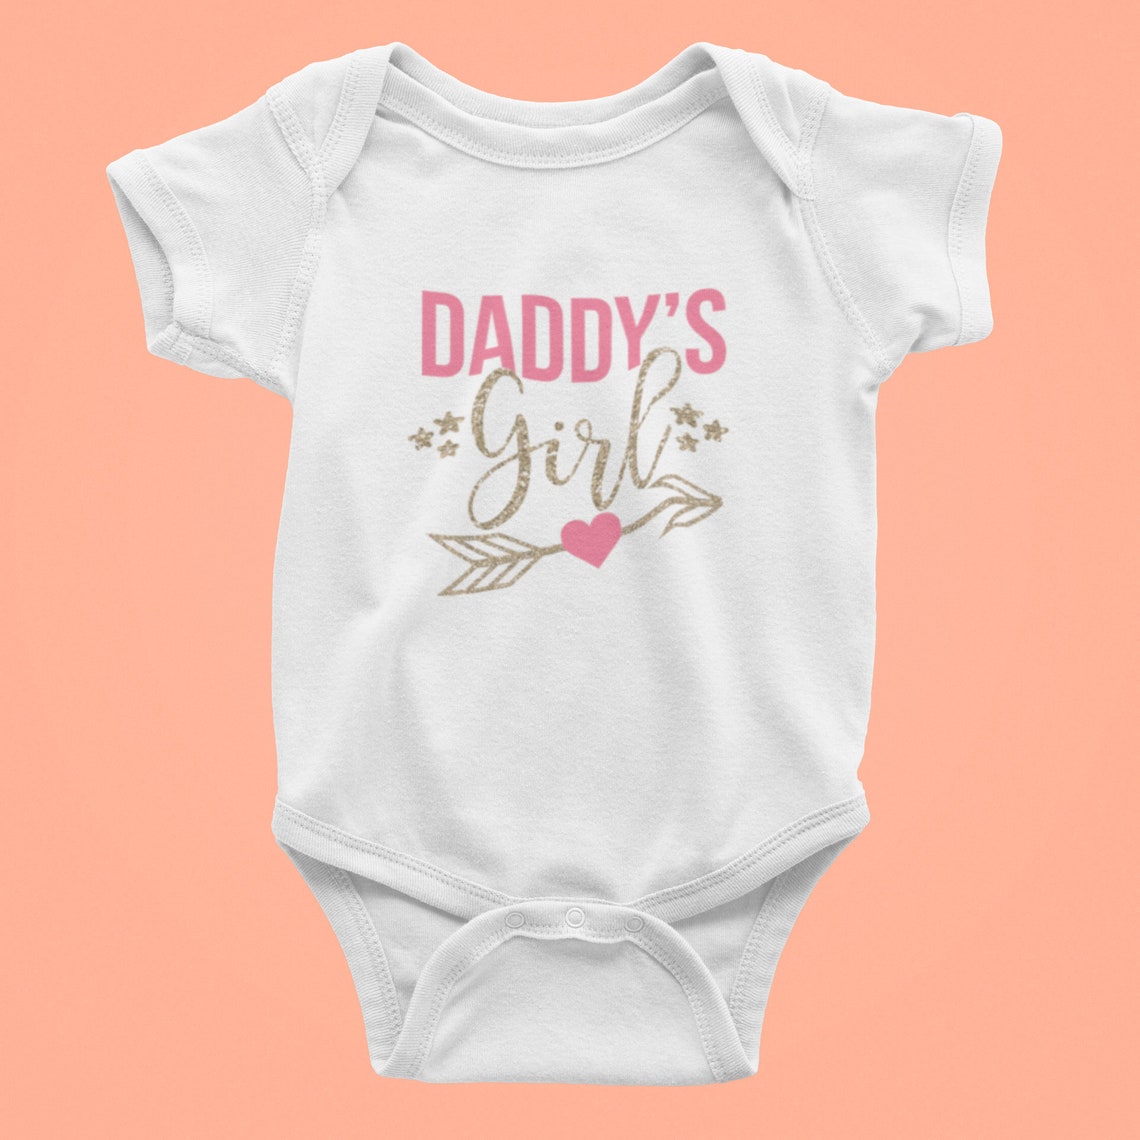 Babies and kids Daddys princess onesie baby girl onesie | Etsy